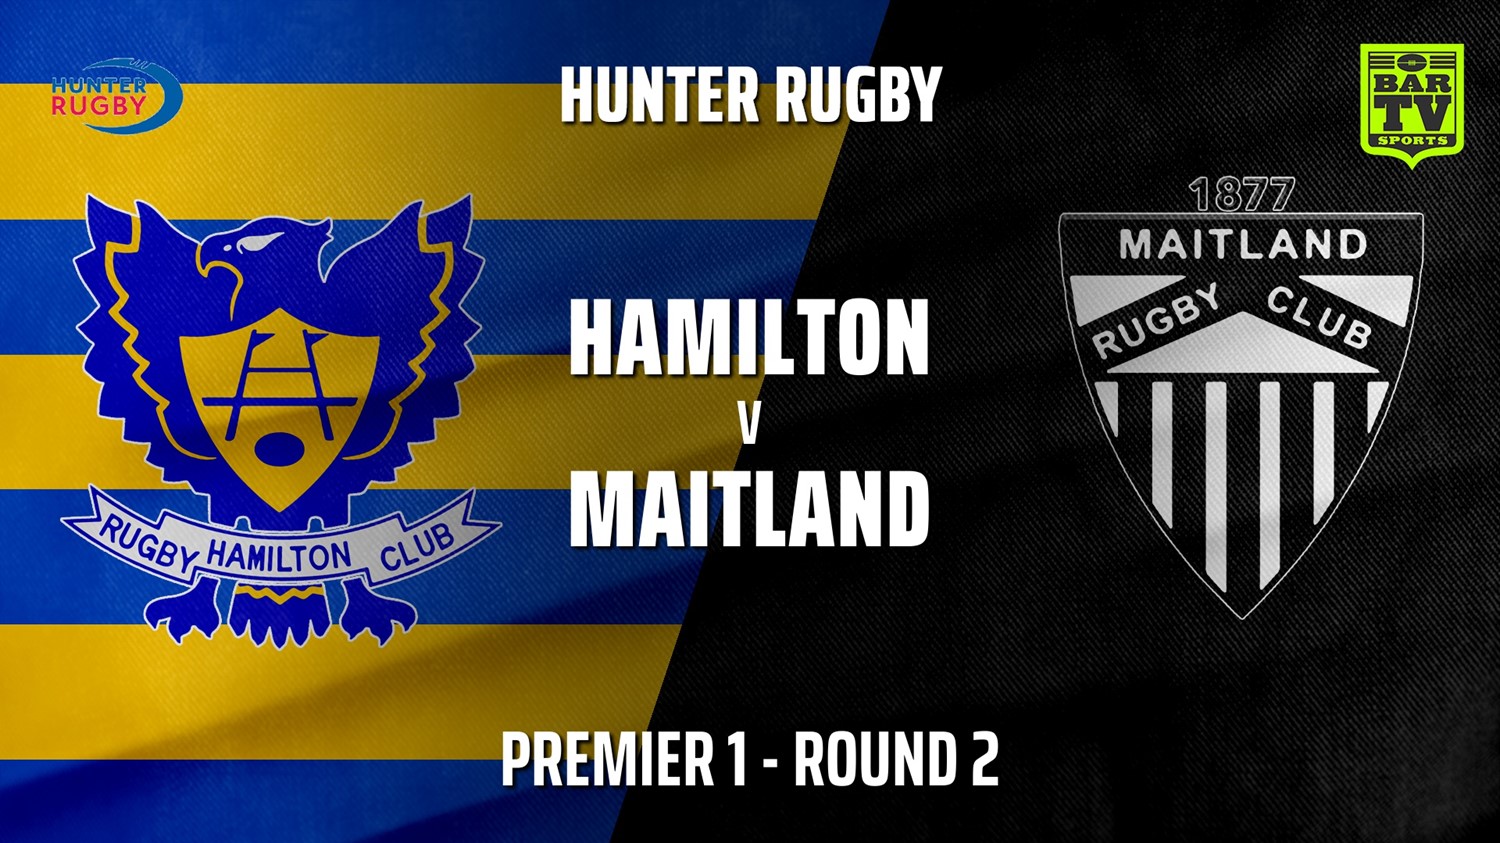 210421-HRU Round 2 - Premier 1 - Hamilton Hawks v Maitland Slate Image